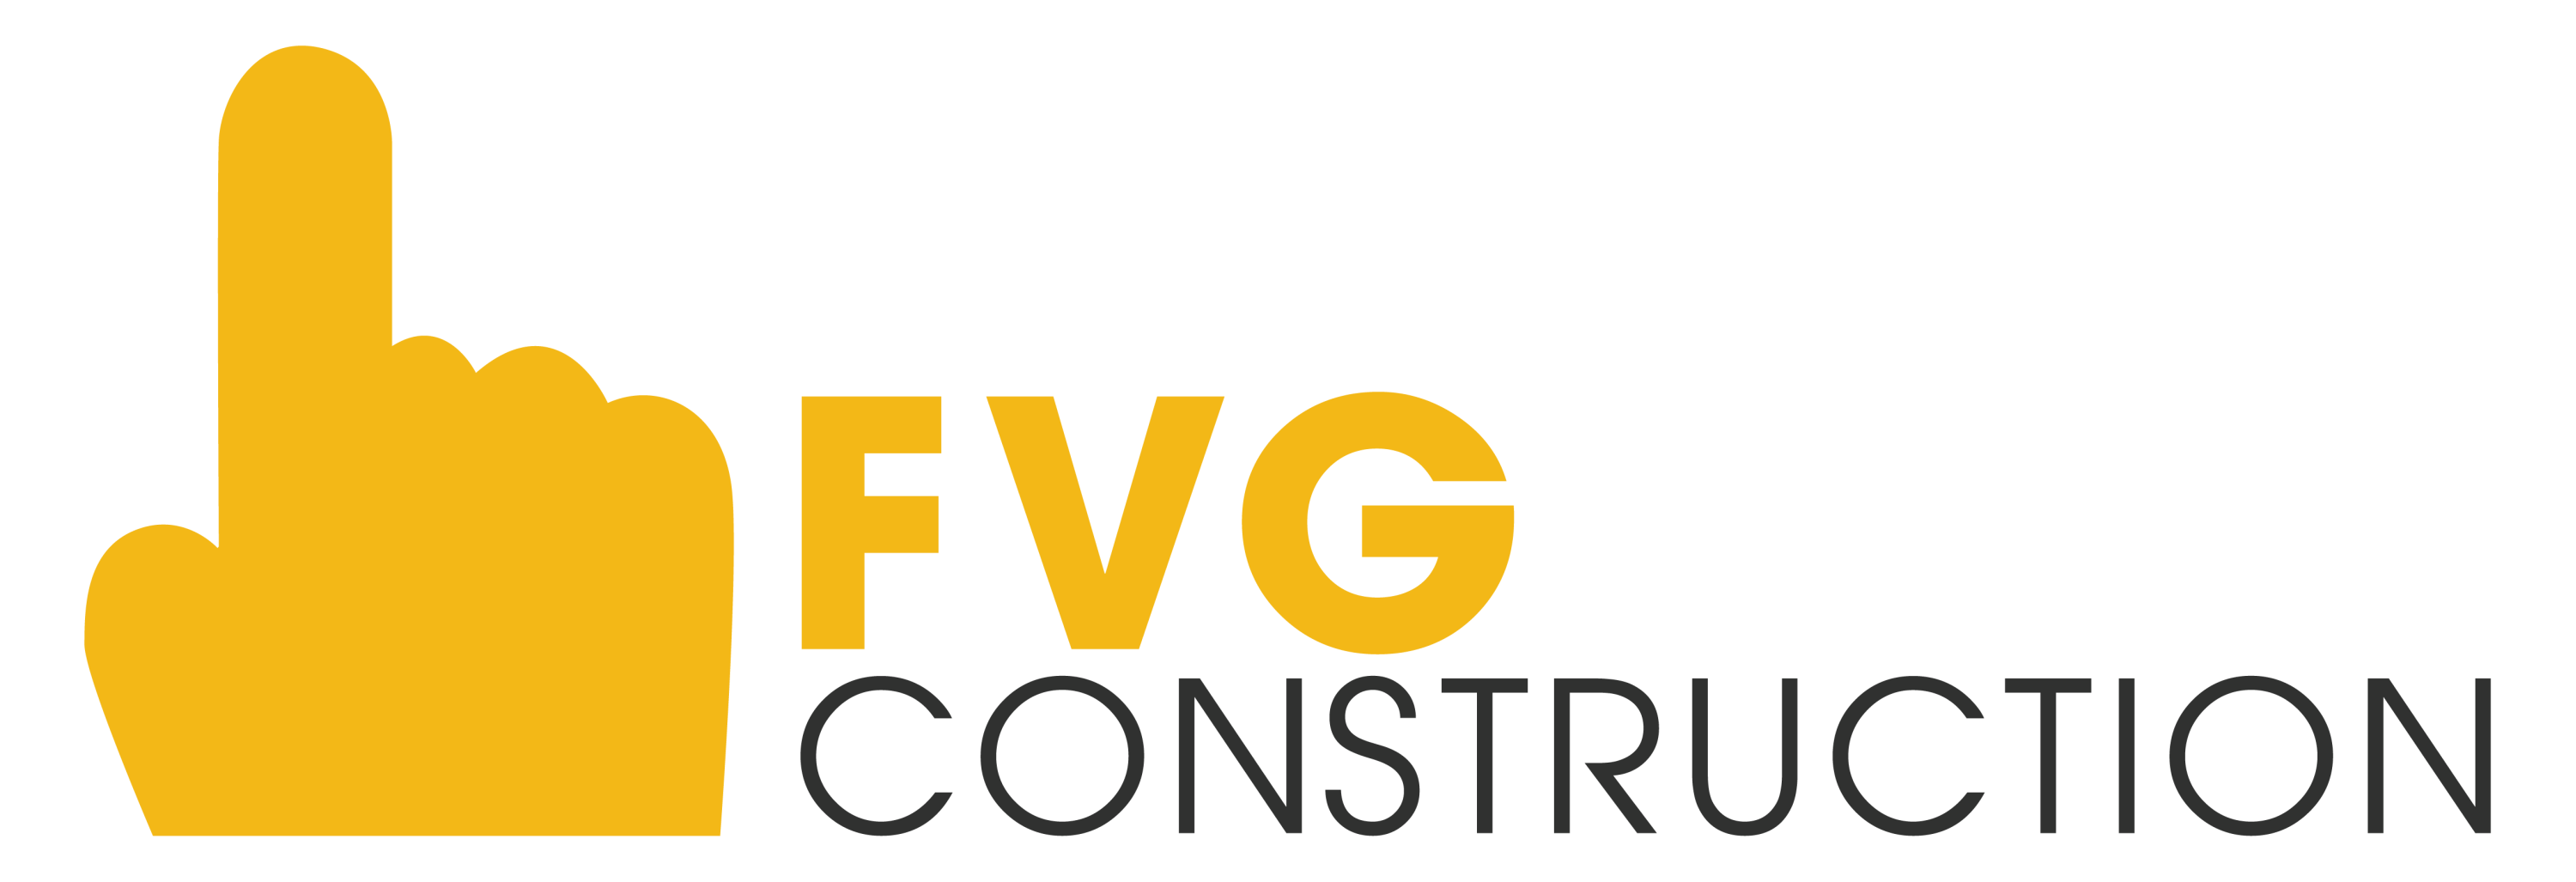 FVG CONSTRUCTION